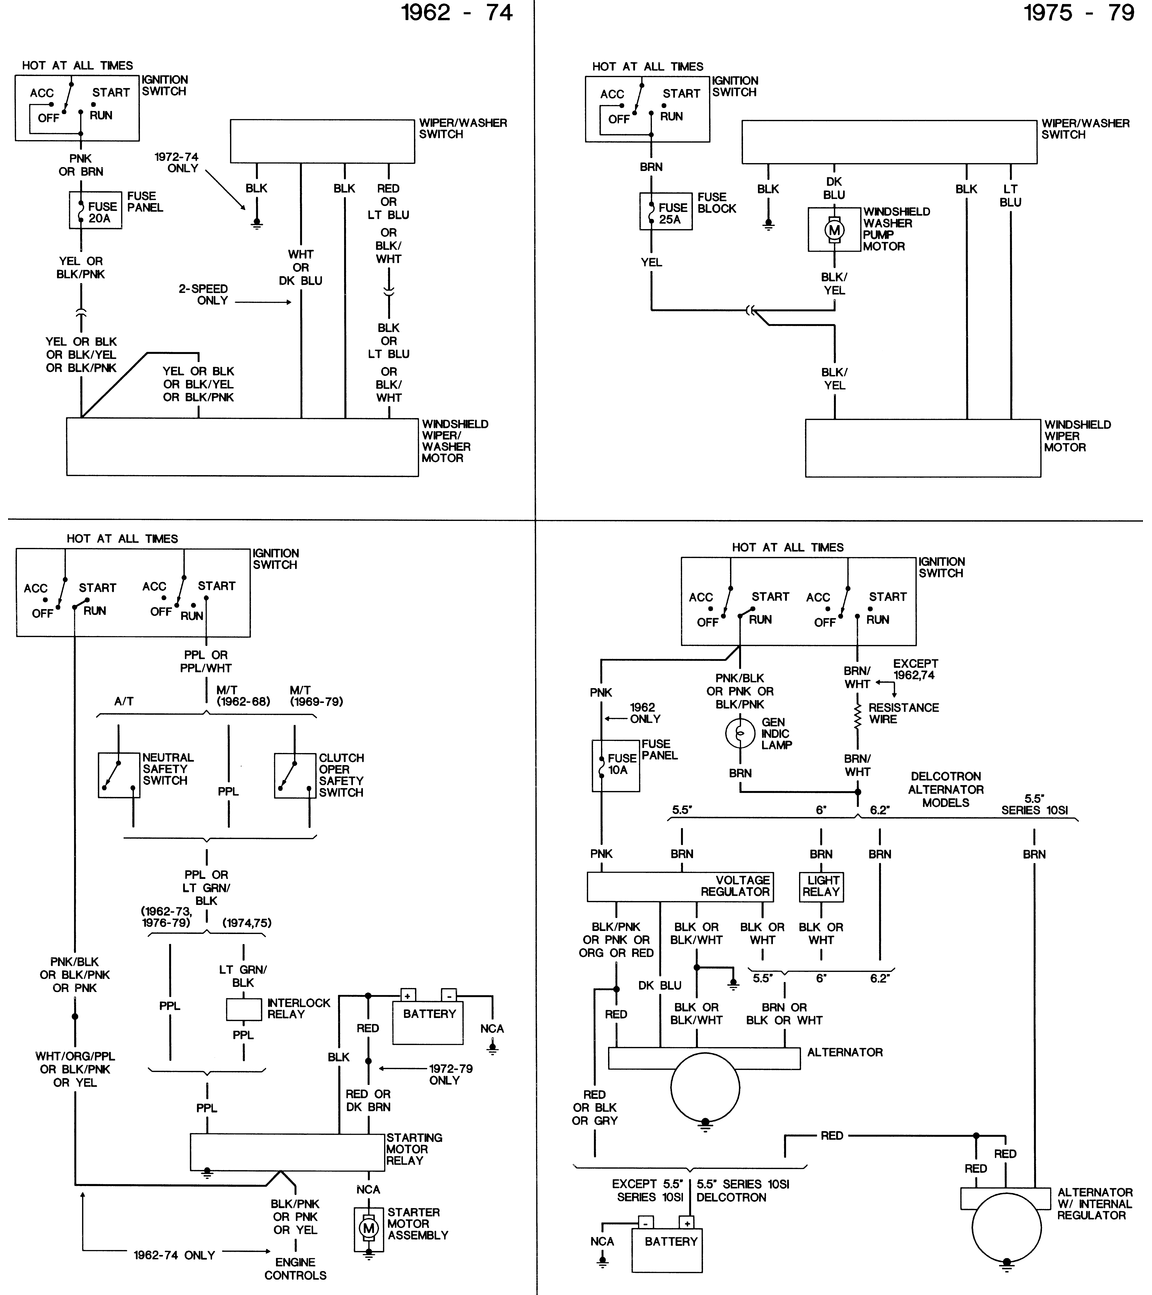 [DIAGRAM] Wiring Diagram For 1969 Impala FULL Version HD Quality 1969